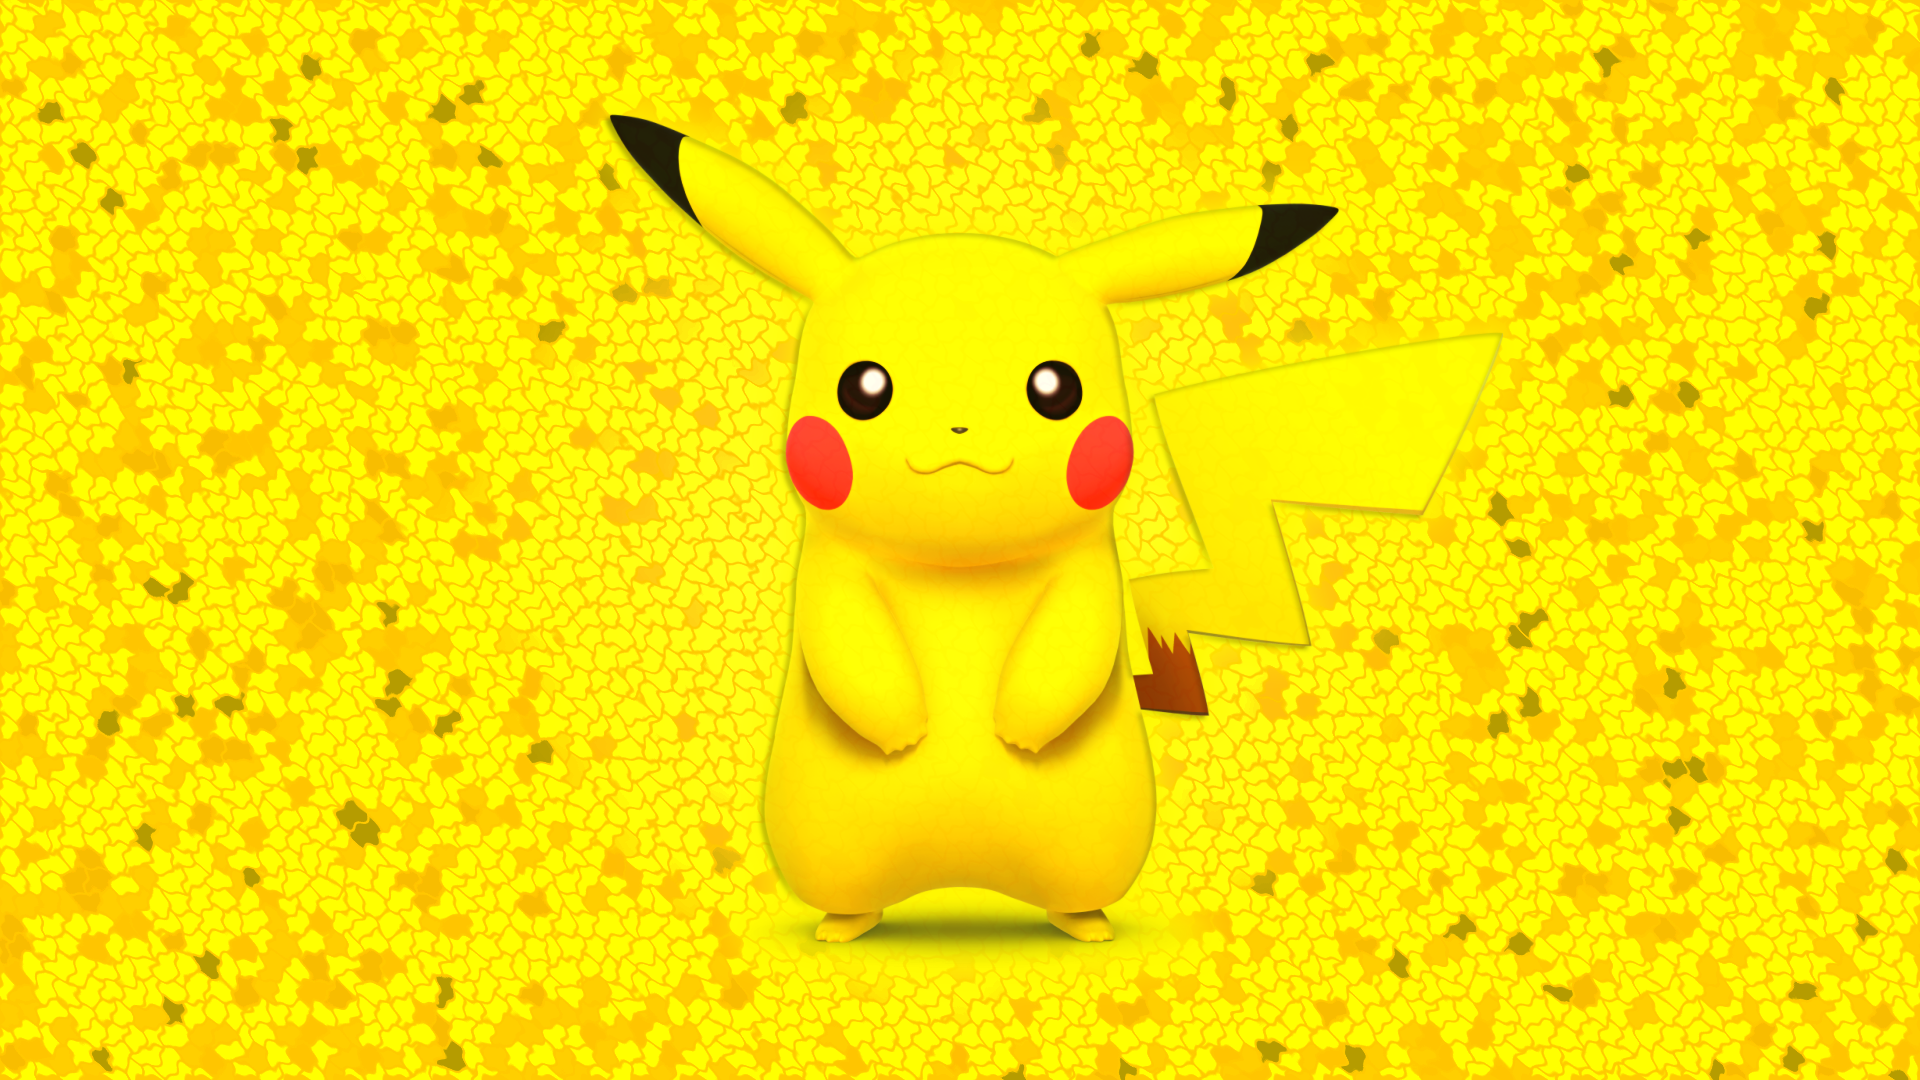 Pikachu Wallpaper. Epic Pikachu